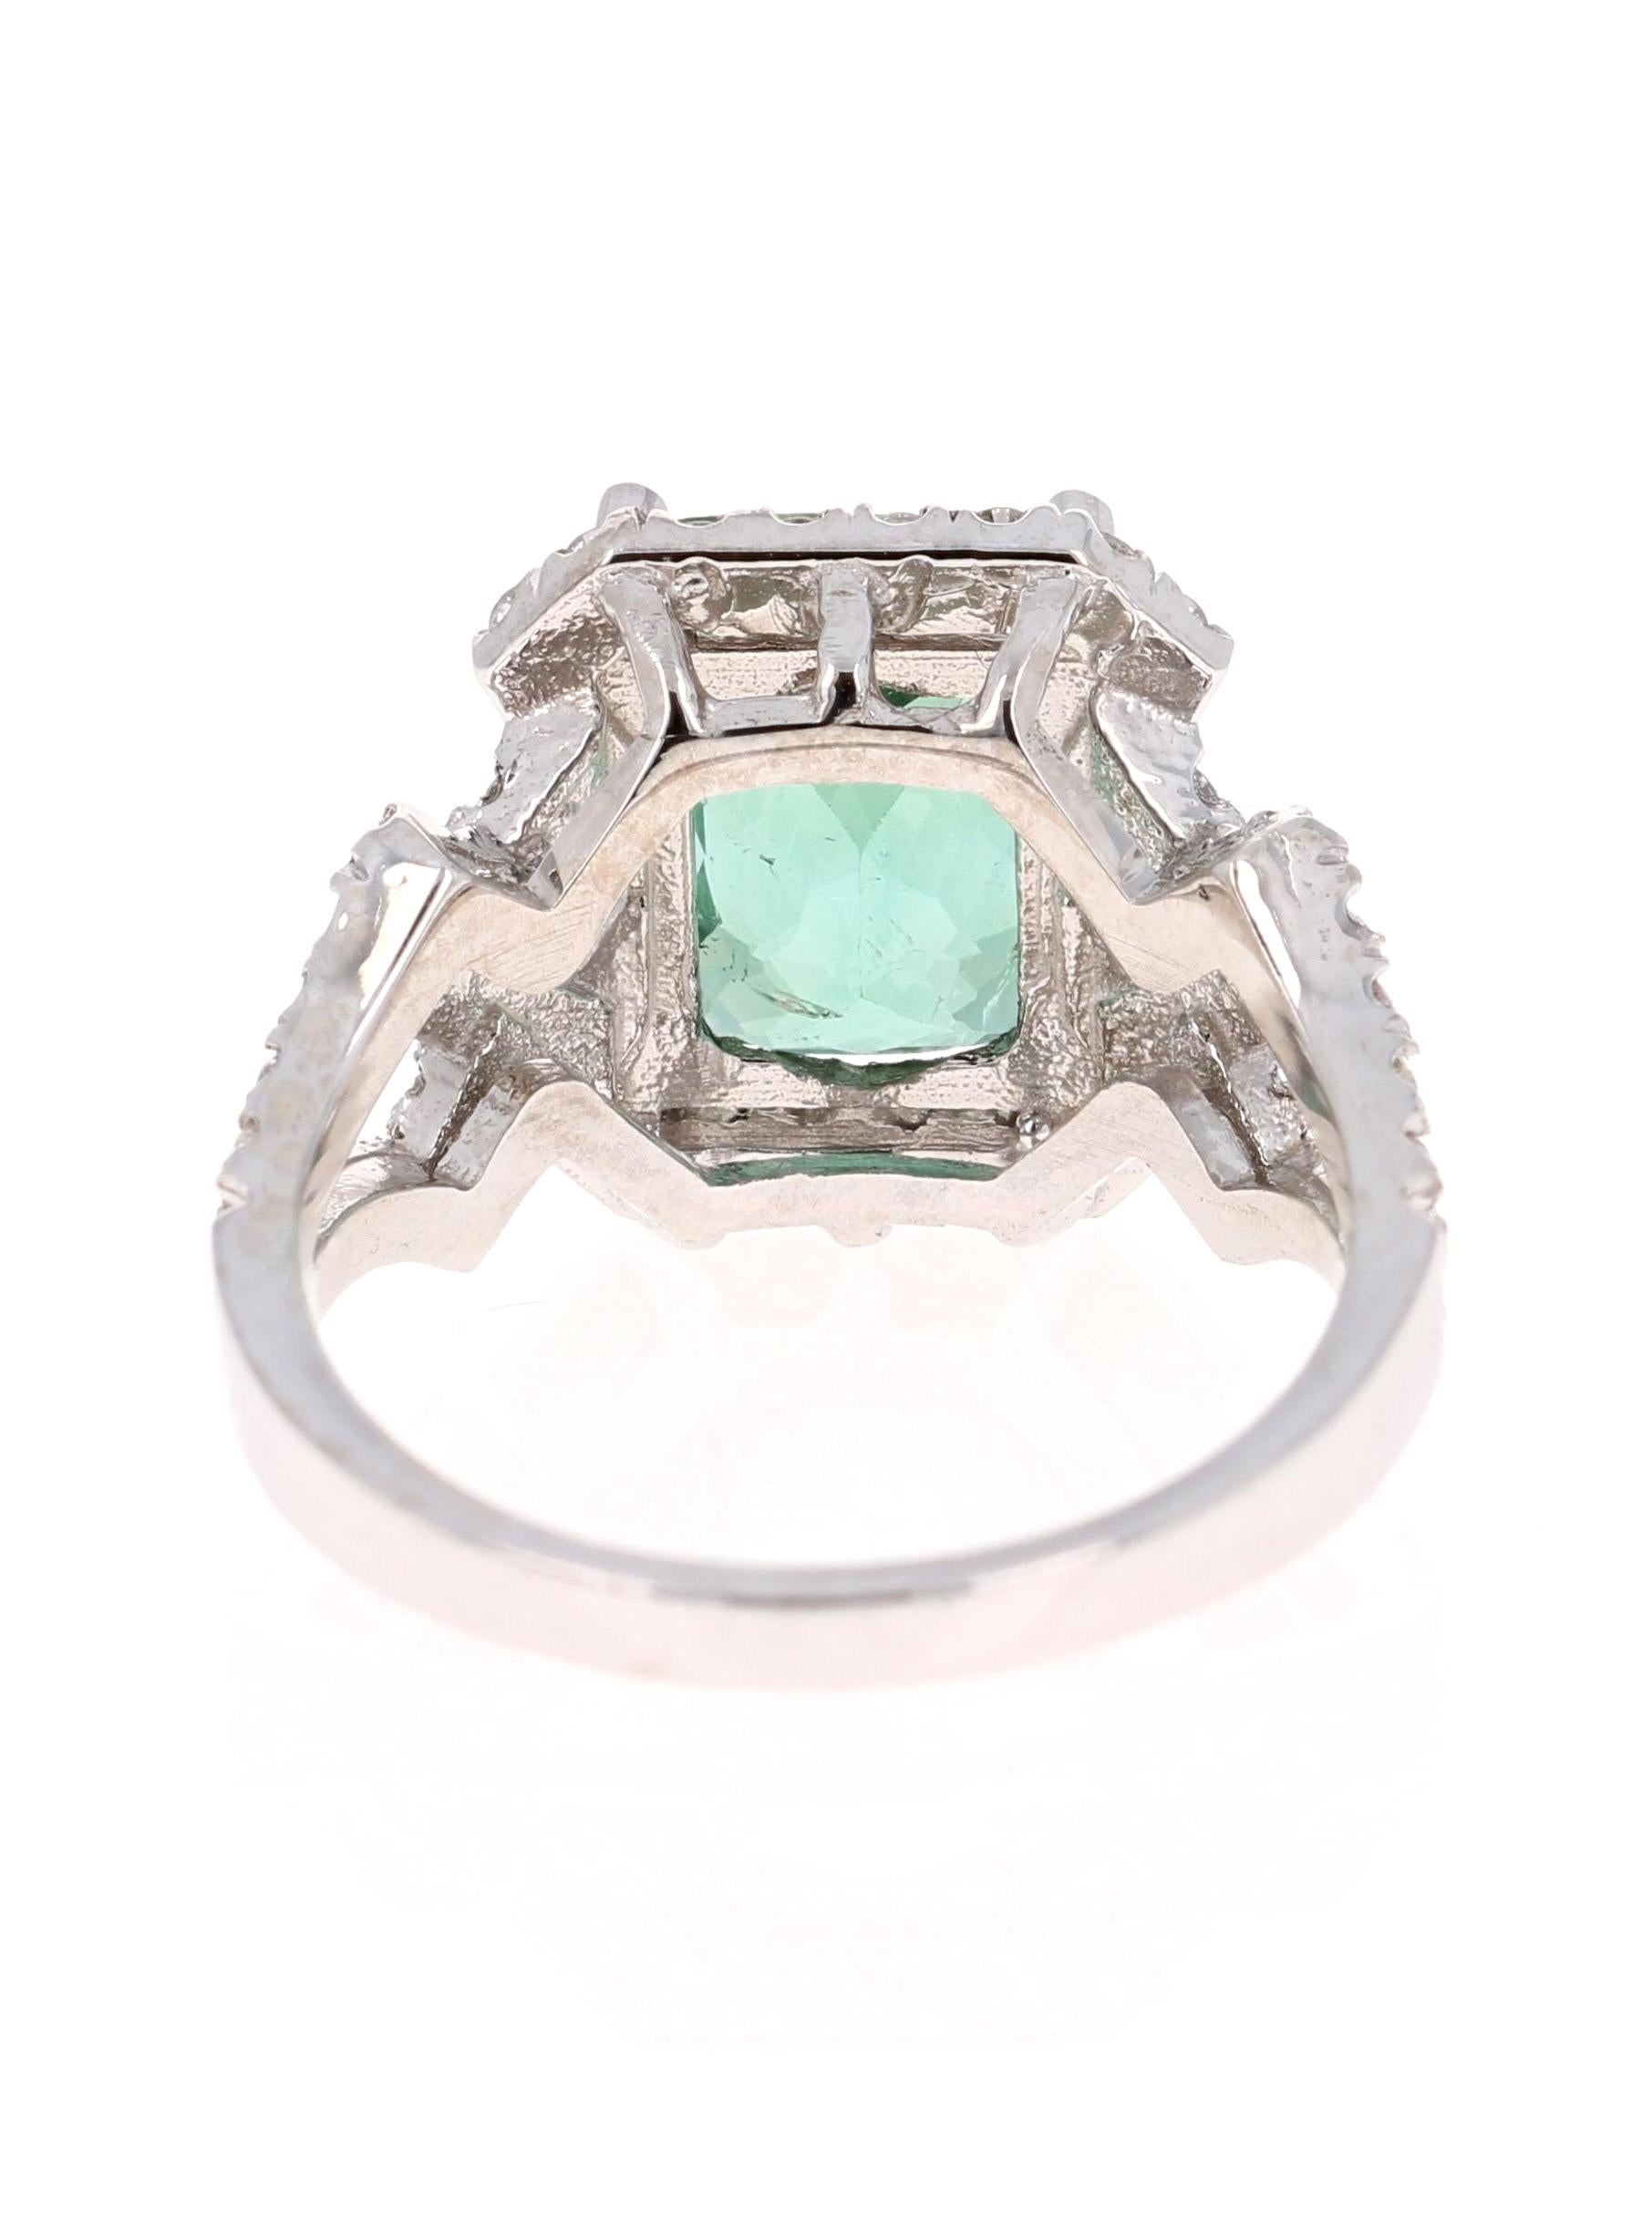 Emerald Cut 4.81 Carat Tourmaline Diamond 14 Karat White Gold Ring For Sale